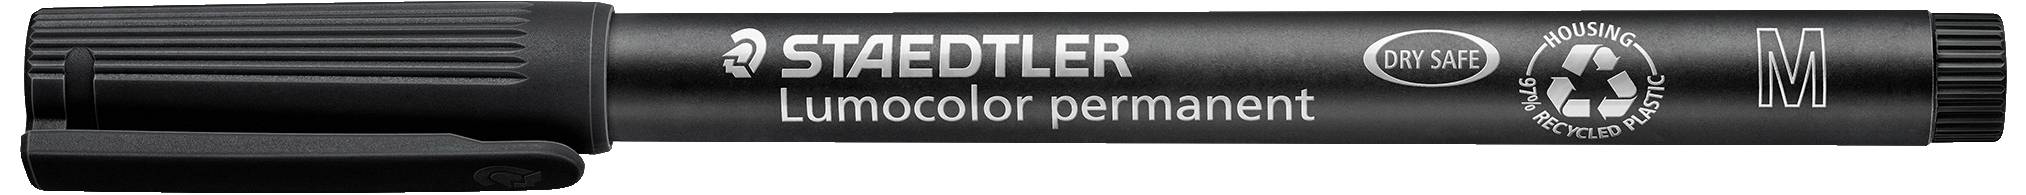 STAEDTLER Projektionsschreiber Lumocolor 317 perm